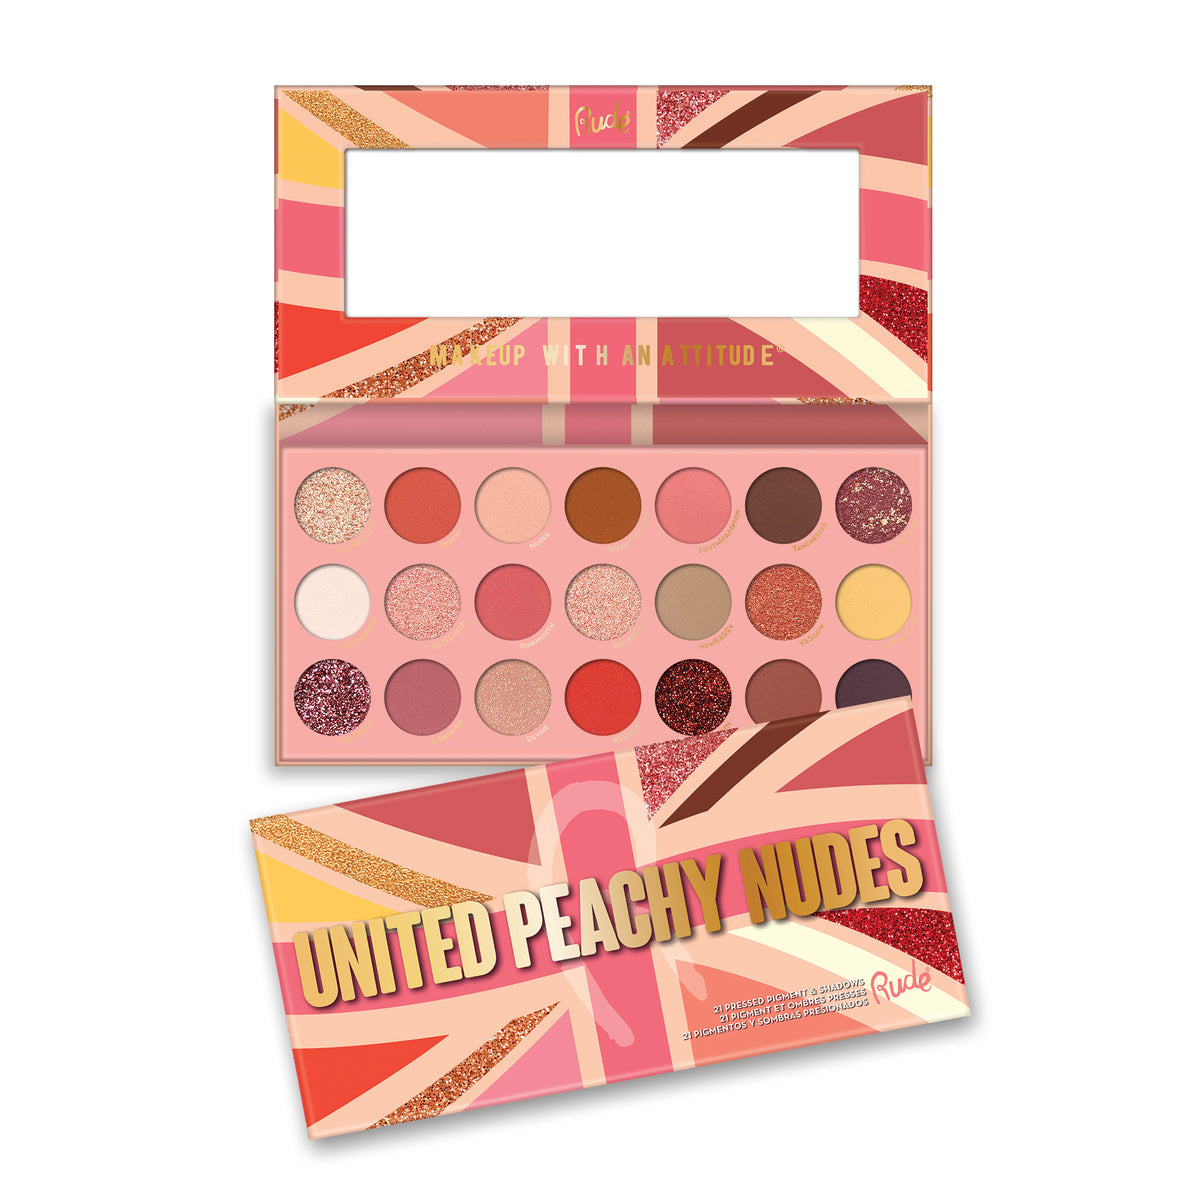 United Peachy Nudes - 21 Pressed Pigment & Shadows Palette